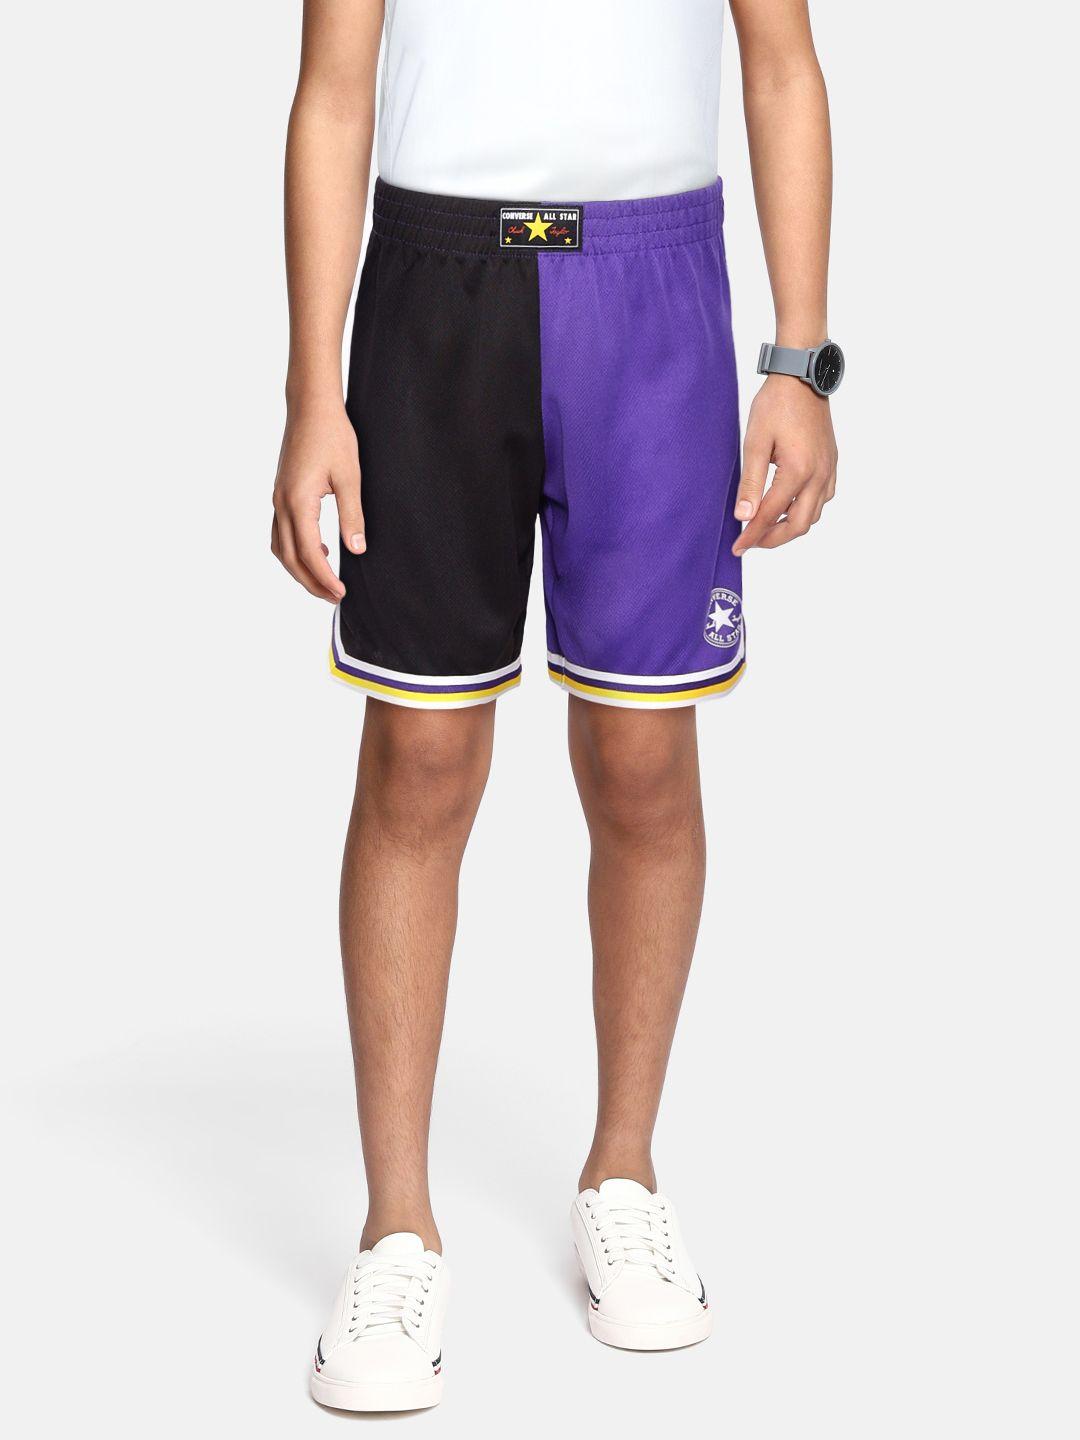 converse boys black & purple colourblocked shorts